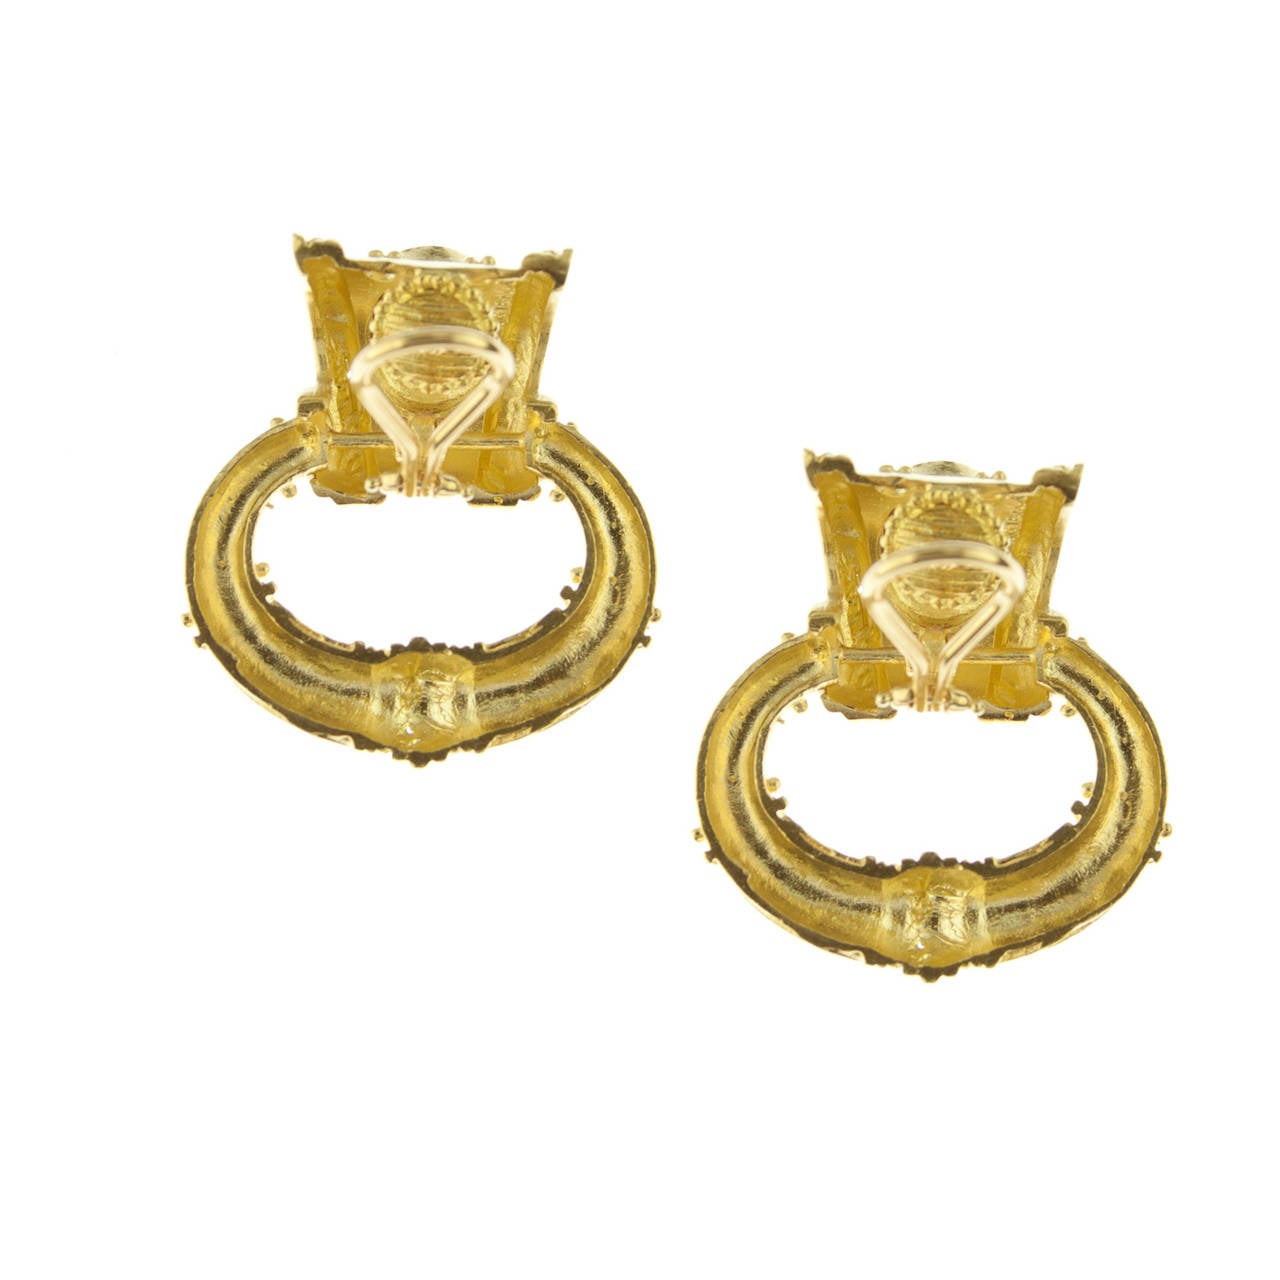 SeidenGang Pink Tourmaline Etruscan Earrings.

Rich Yellow 18k Gold stamped SG 18K 

Clip on earrings.